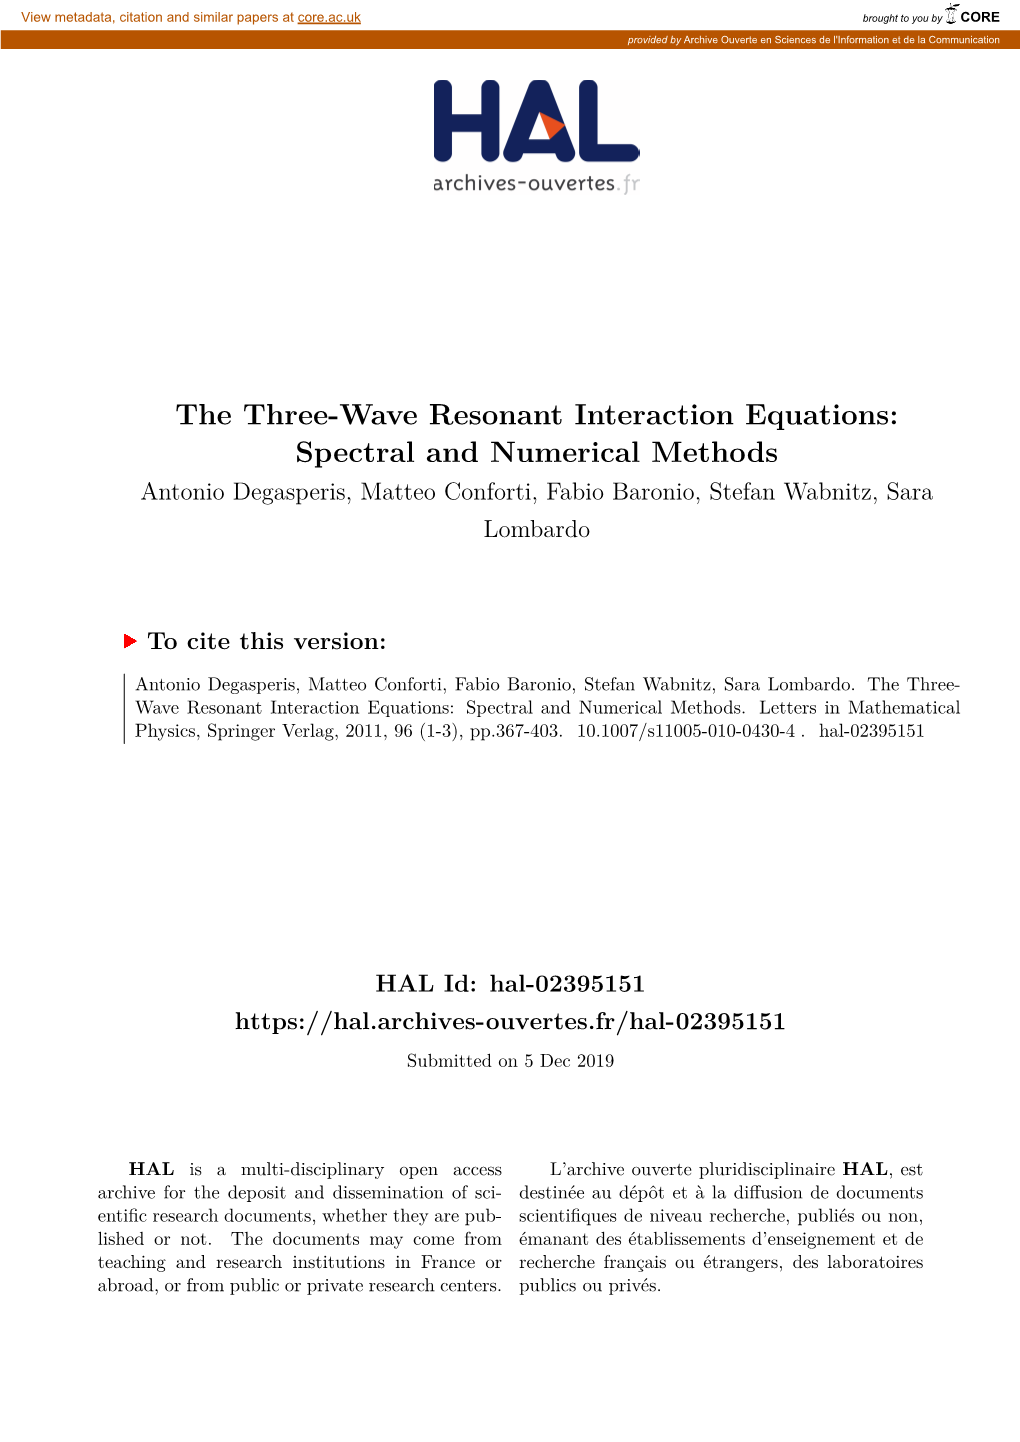 The Three-Wave Resonant Interaction Equations: Spectral and Numerical Methods Antonio Degasperis, Matteo Conforti, Fabio Baronio, Stefan Wabnitz, Sara Lombardo